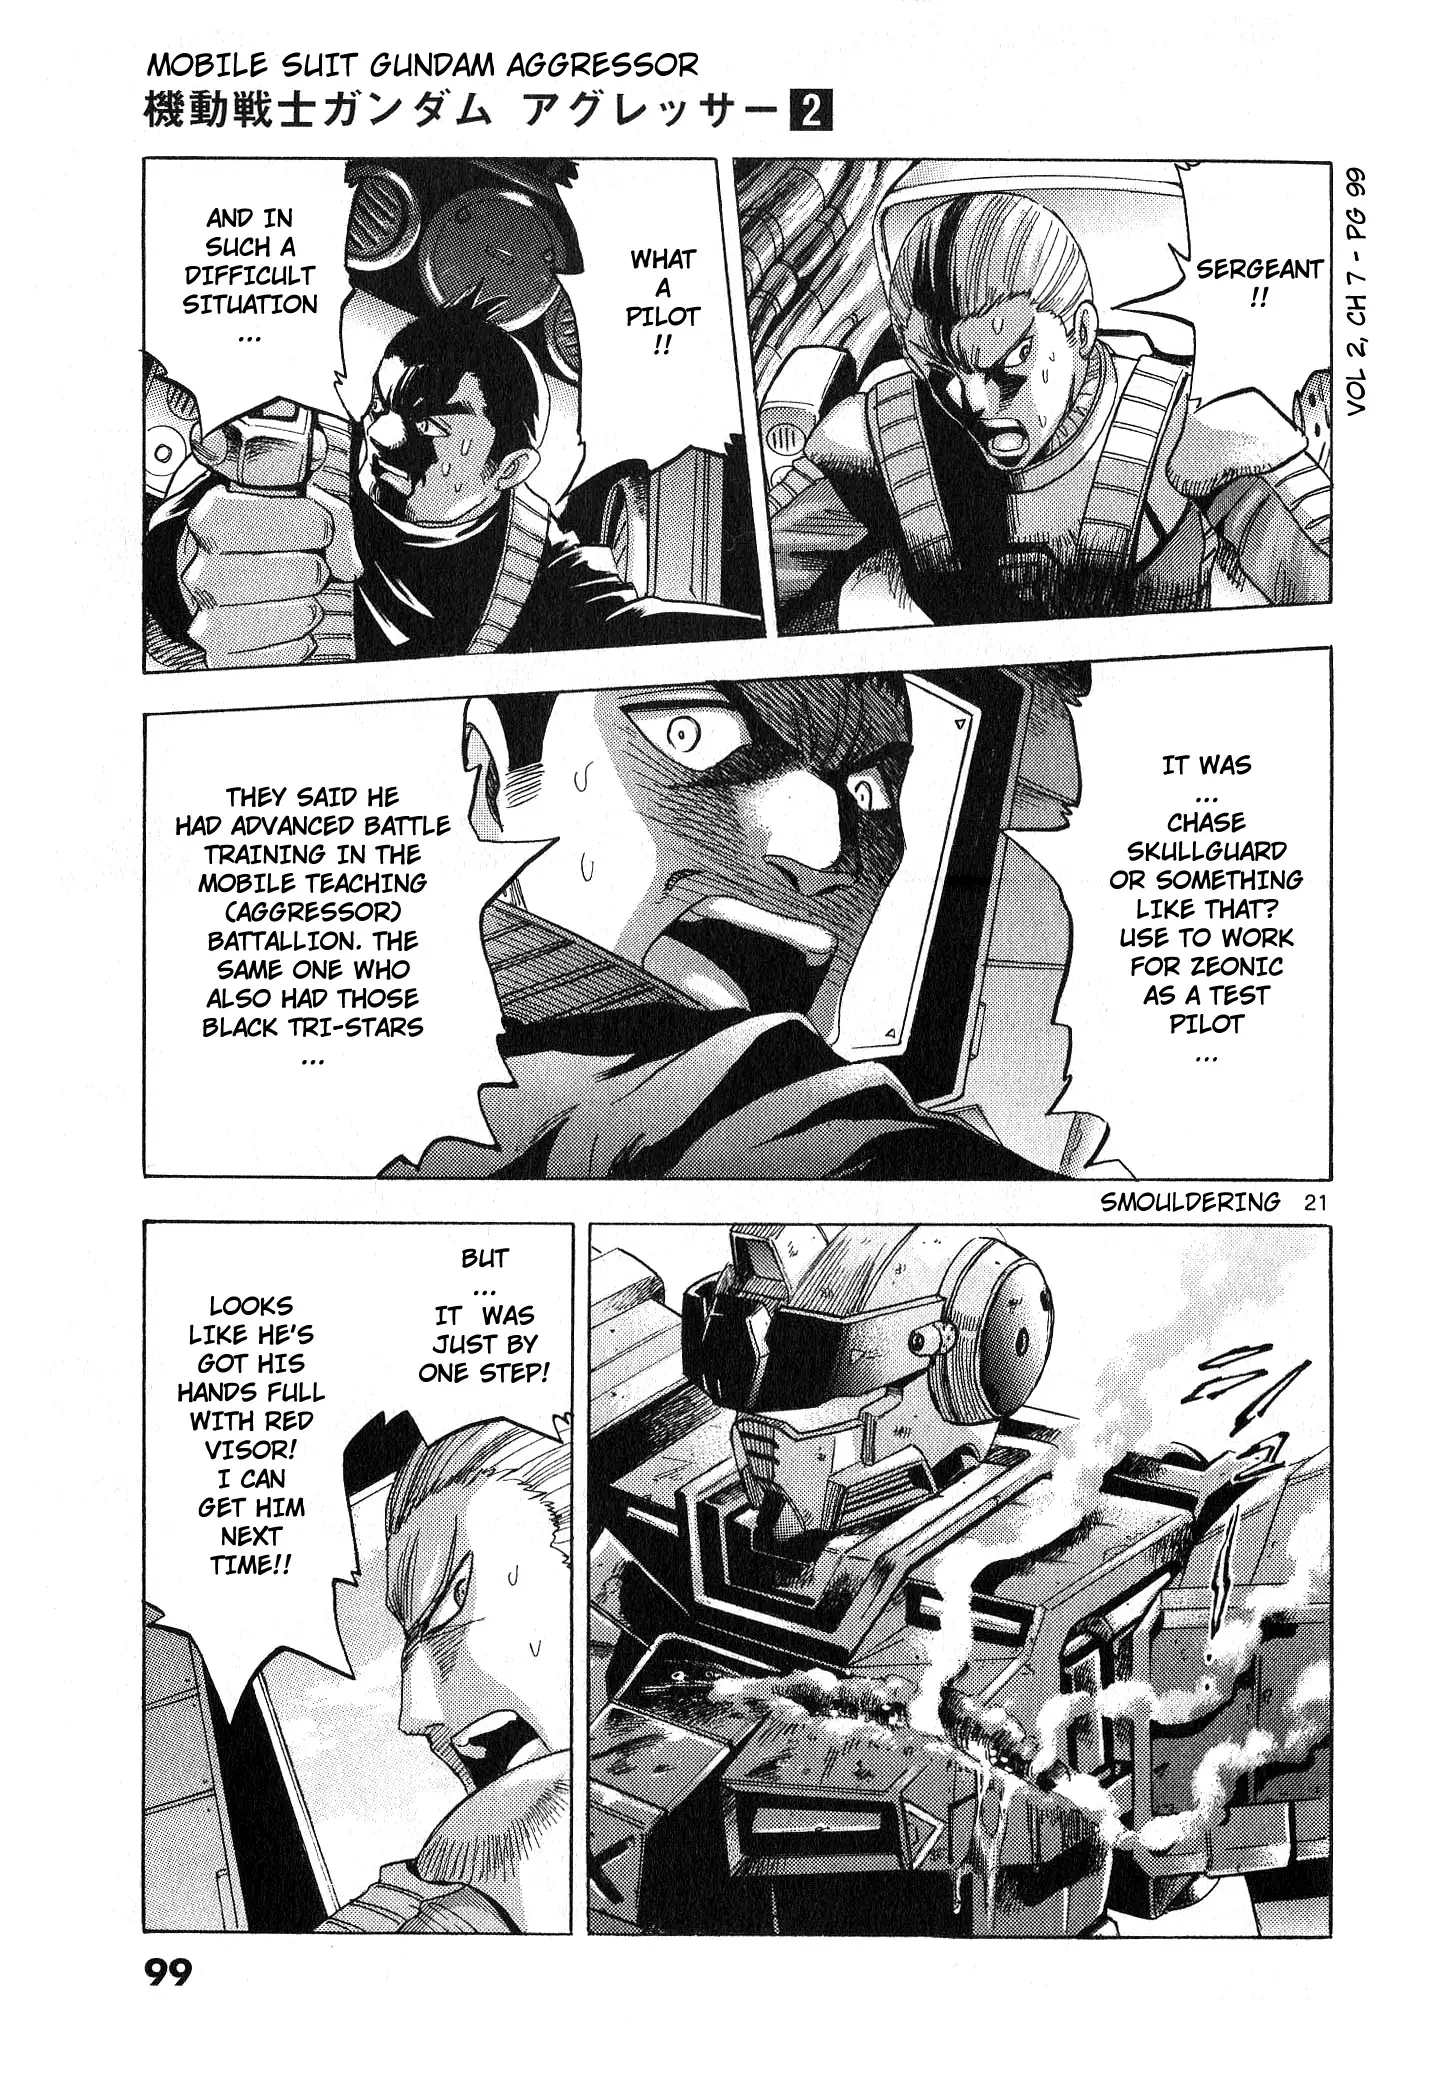 Mobile Suit Gundam Aggressor - 7 page 19-87ac974a